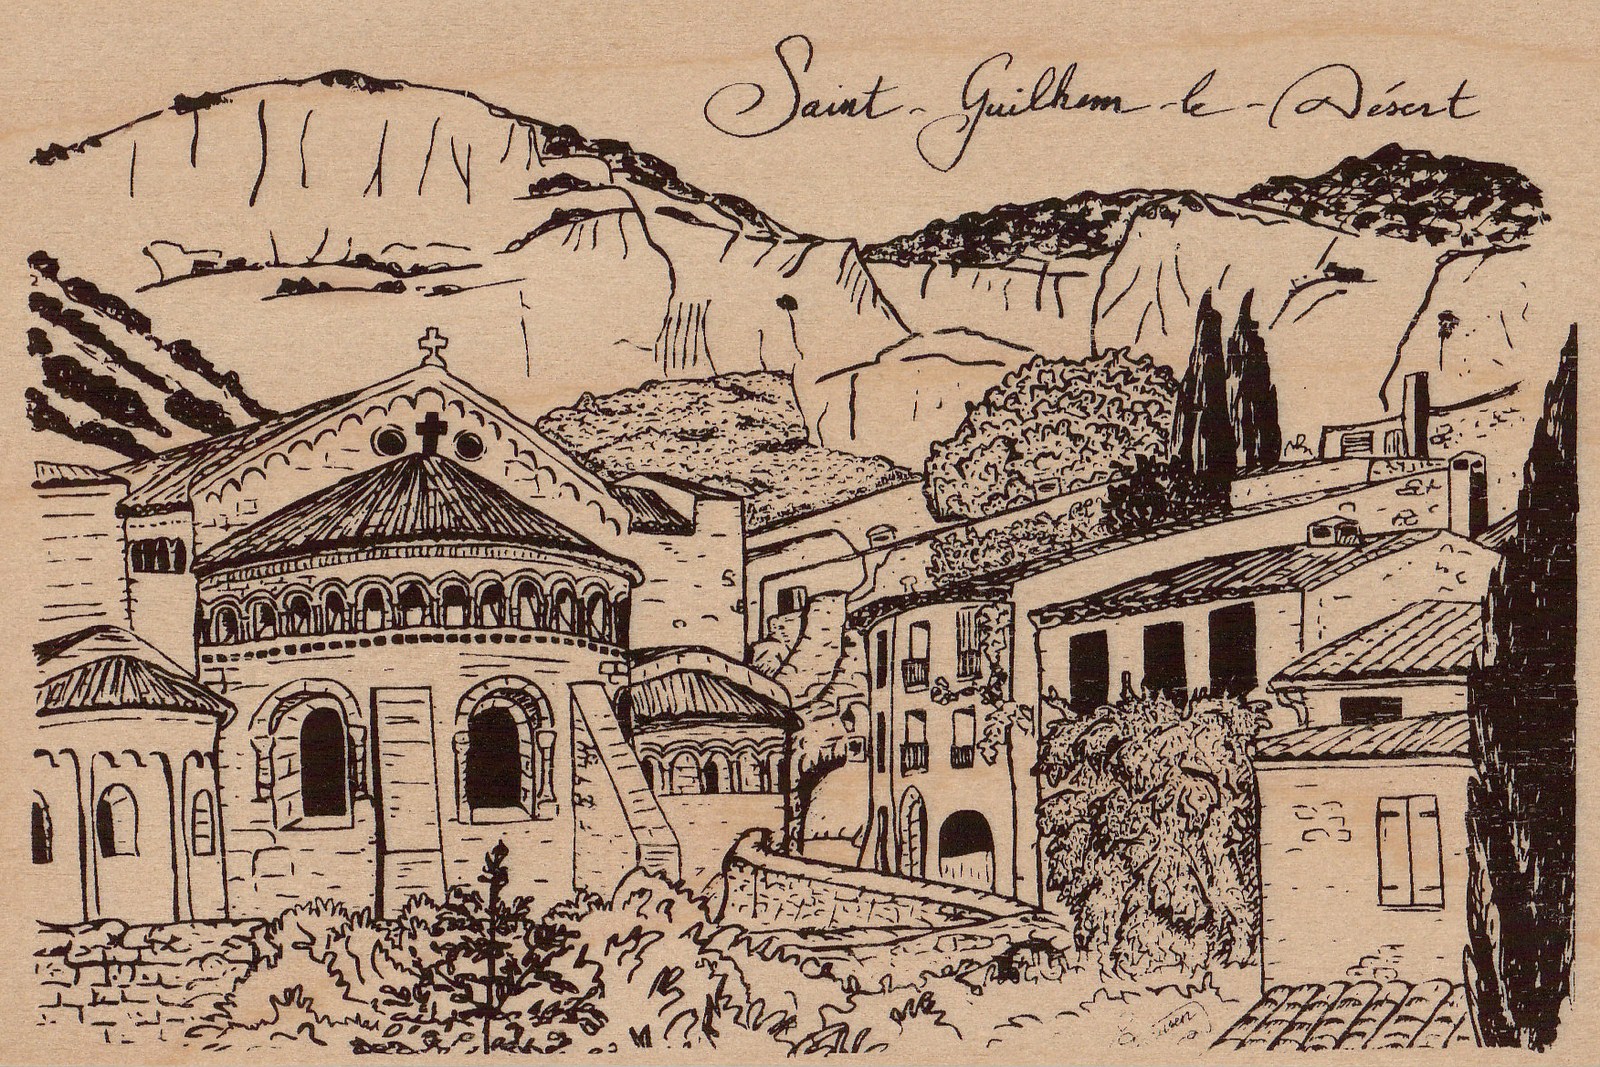 carte postale bois - st guilhem abbaye